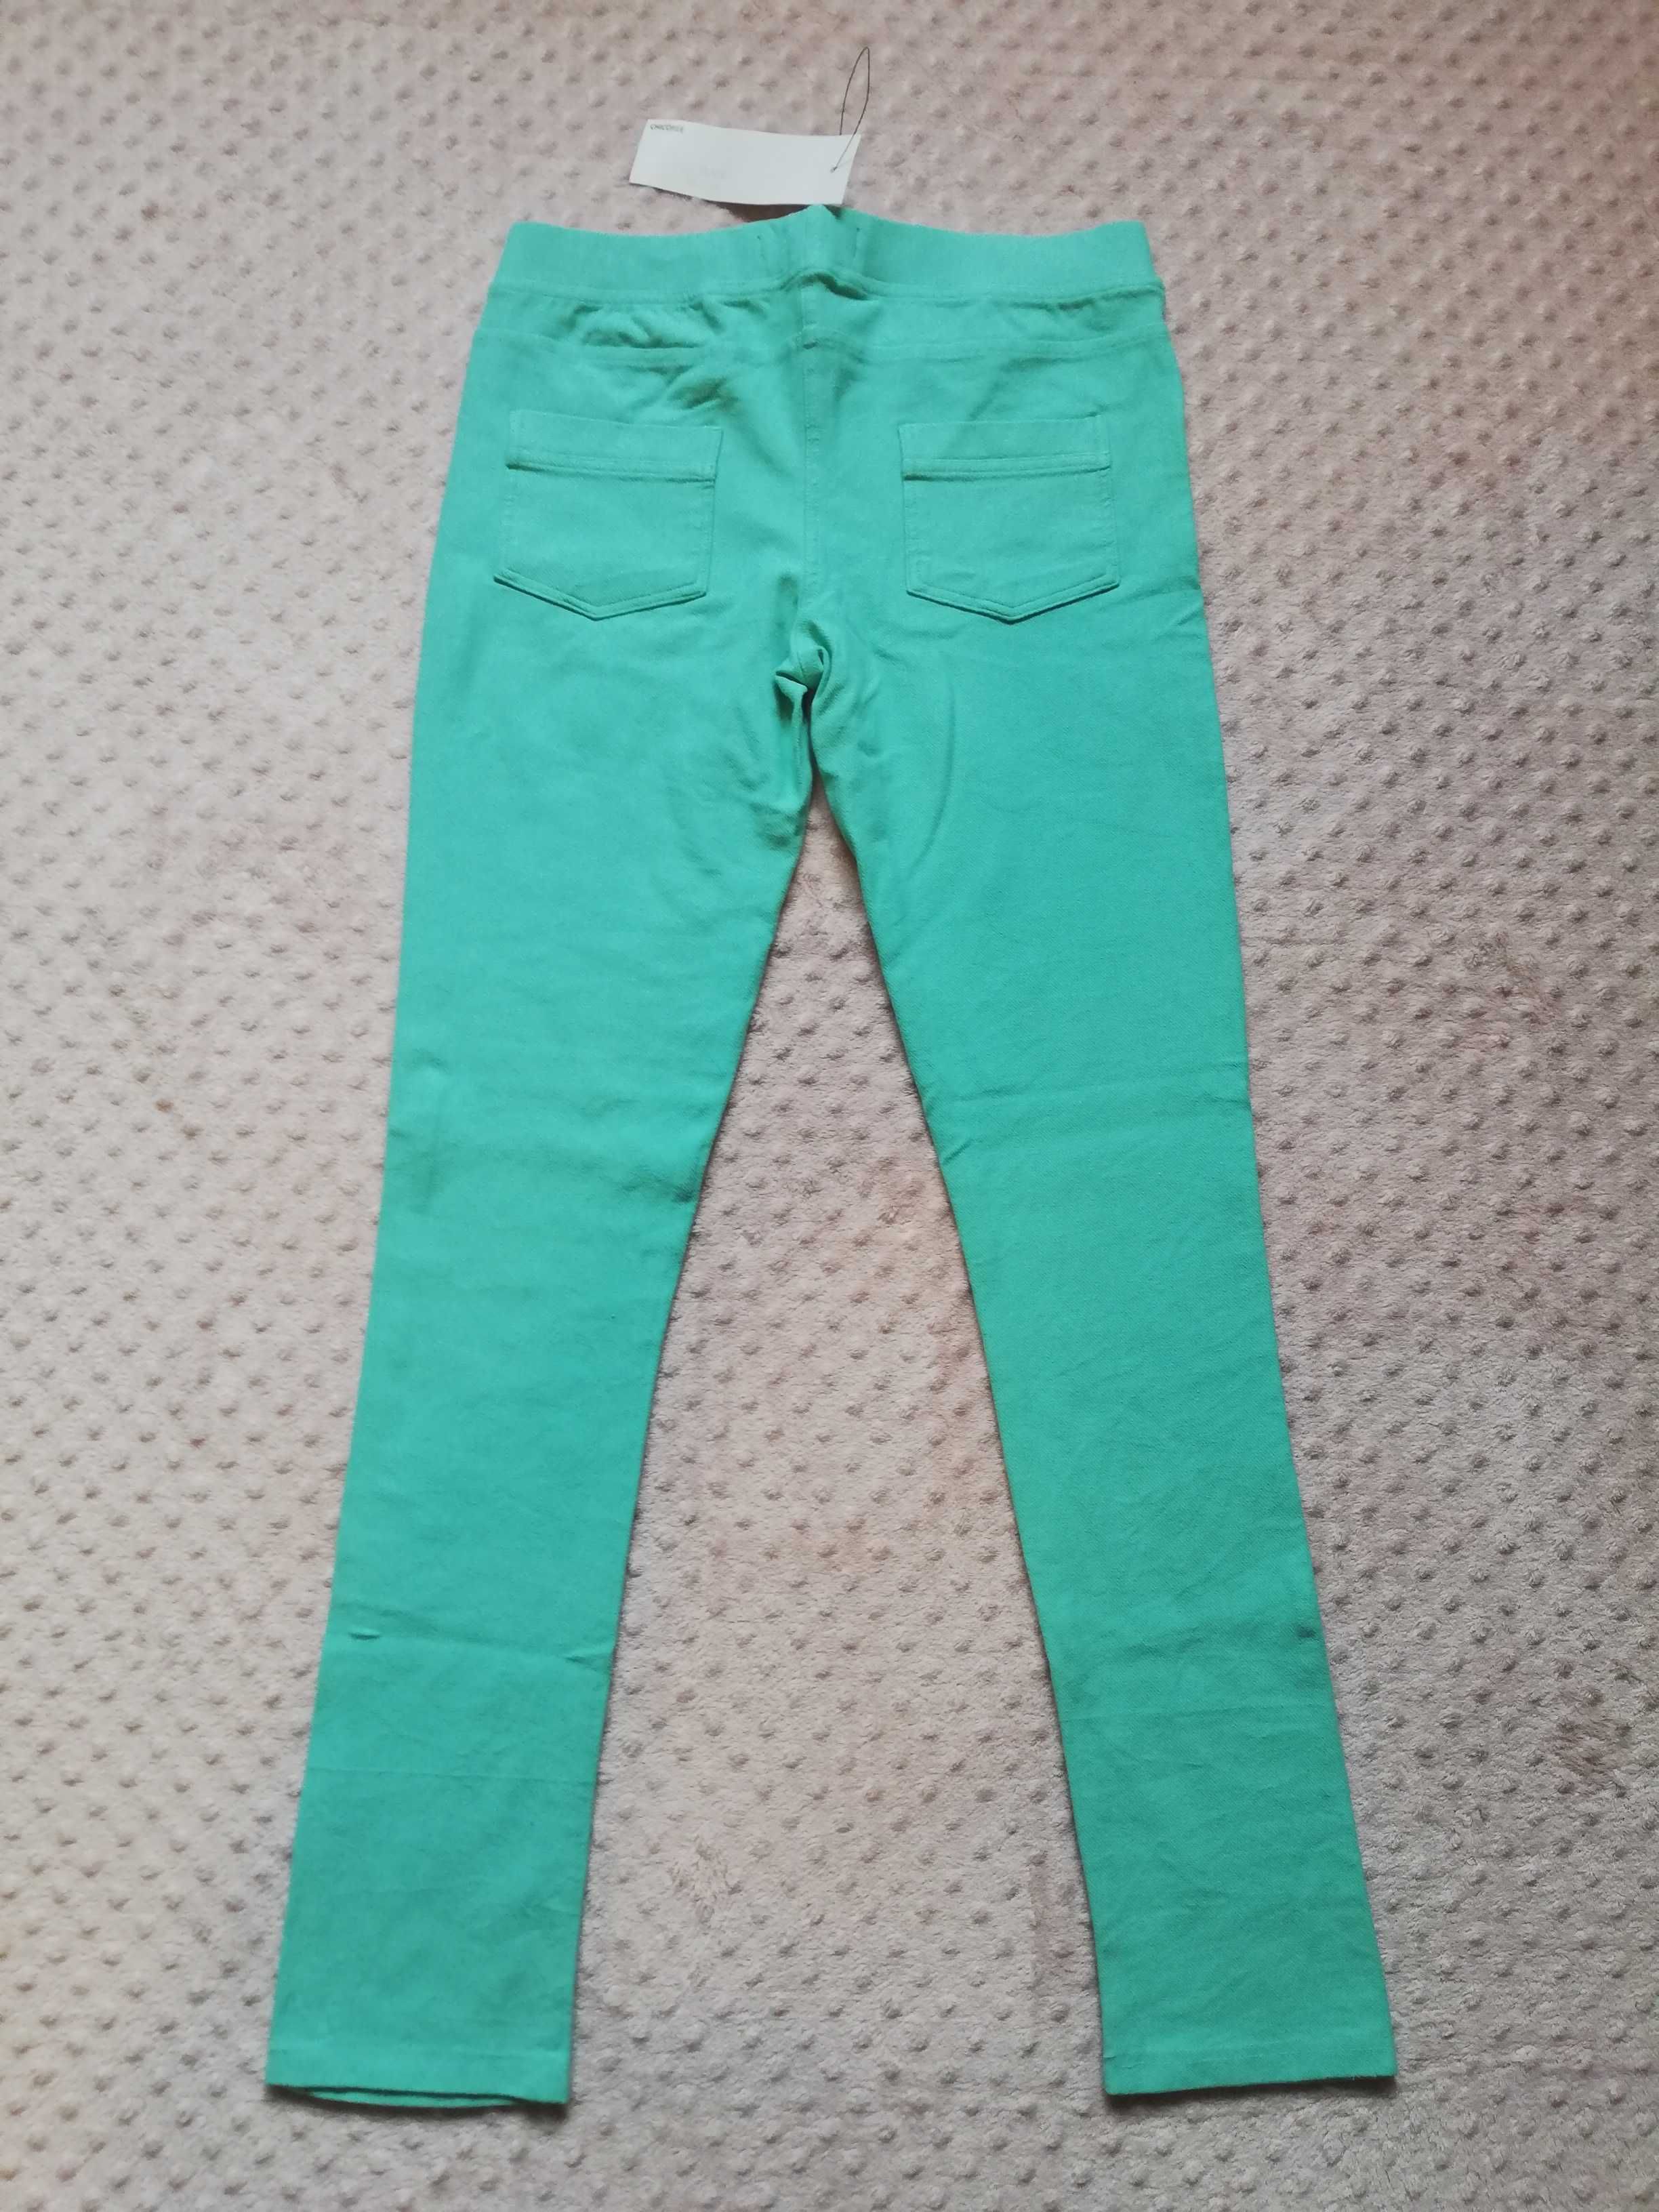 Spodnie legginsy CHICOREE r. S *nowe tanio* super kolor